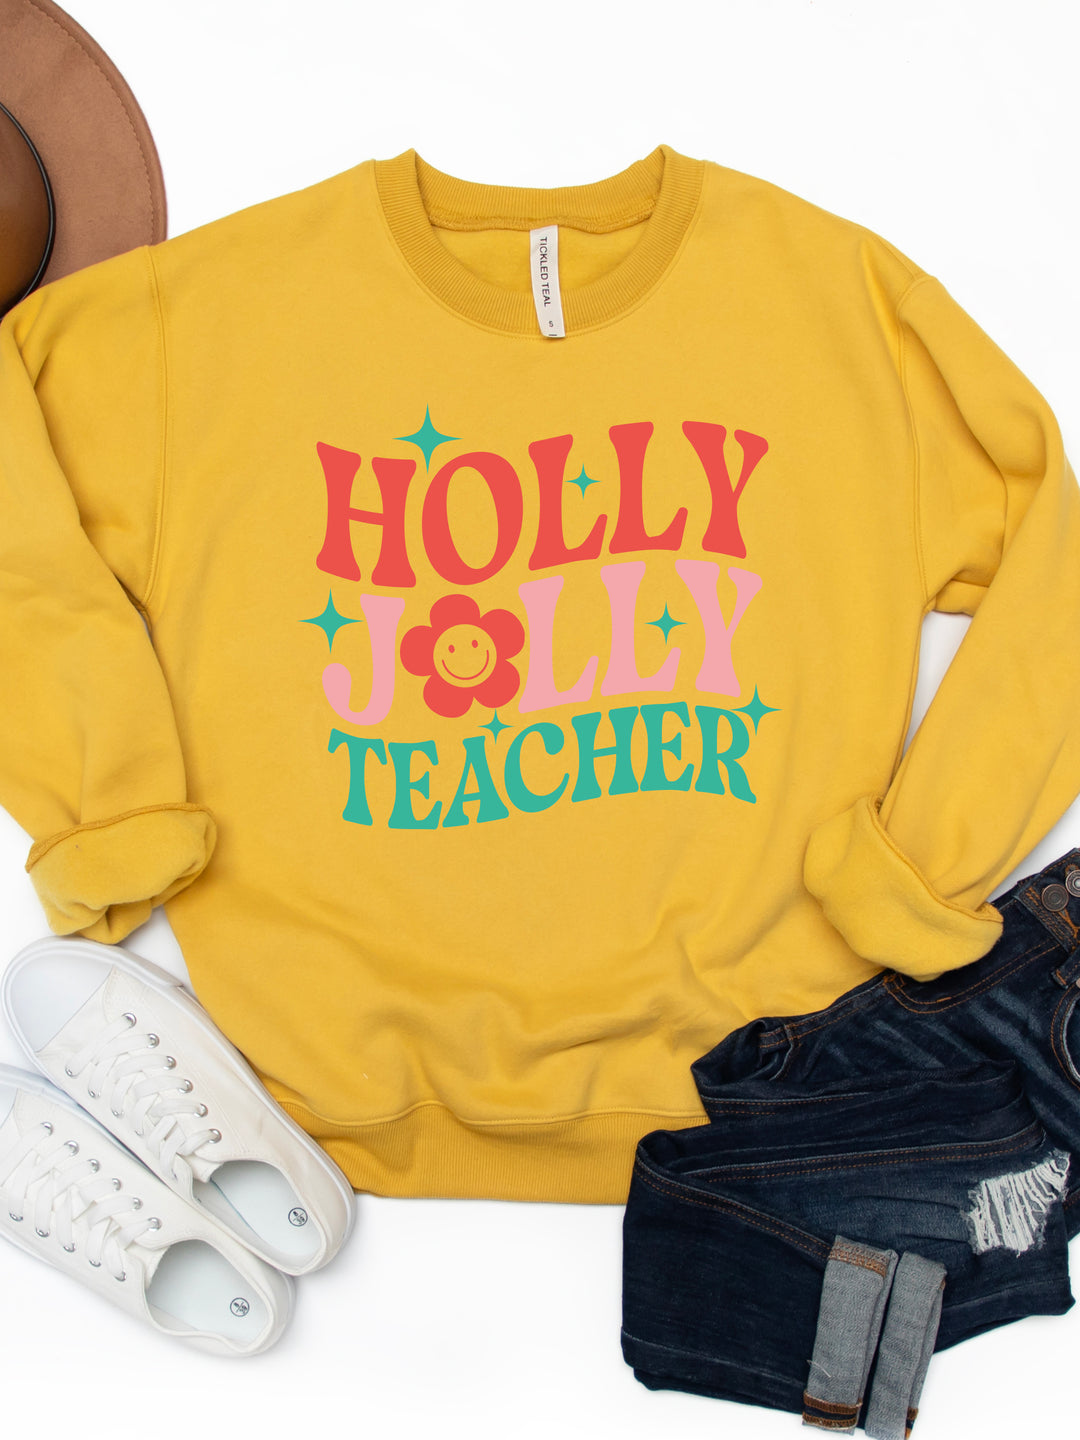 Holly Jolly Teacher - Graphic Sweatshirt